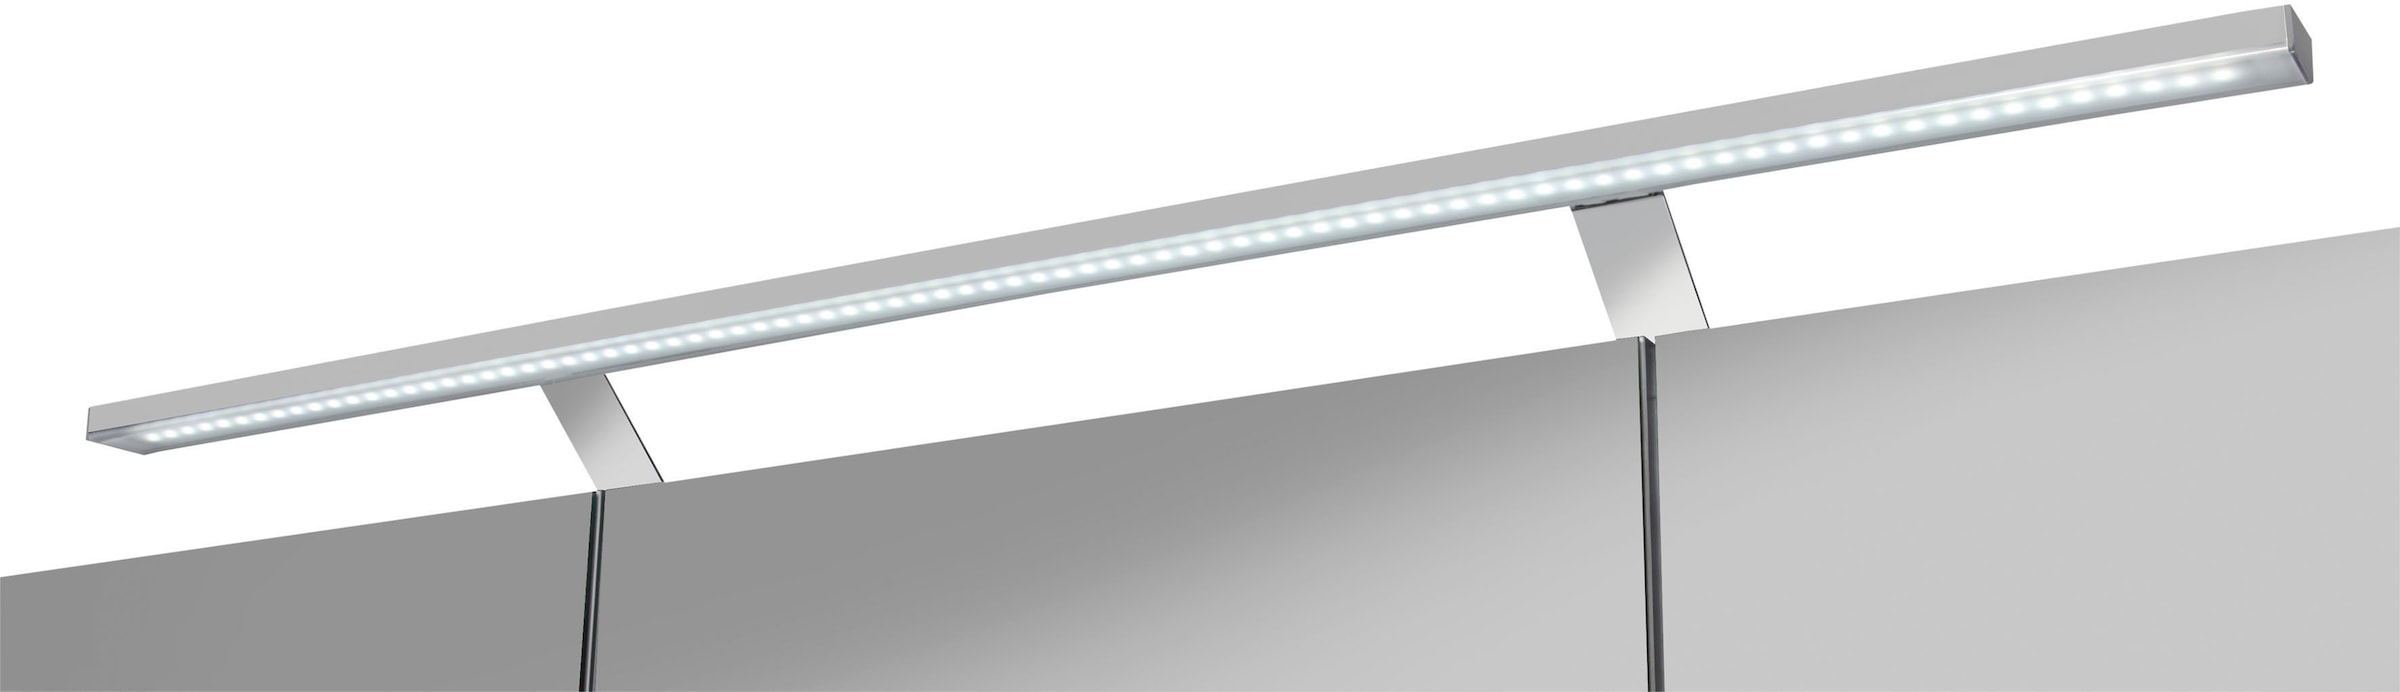 welltime Spiegelschrank »Torino«, Breite 100 cm, 3-türig, LED-Beleuchtung, Schalter-/Steckdosenbox